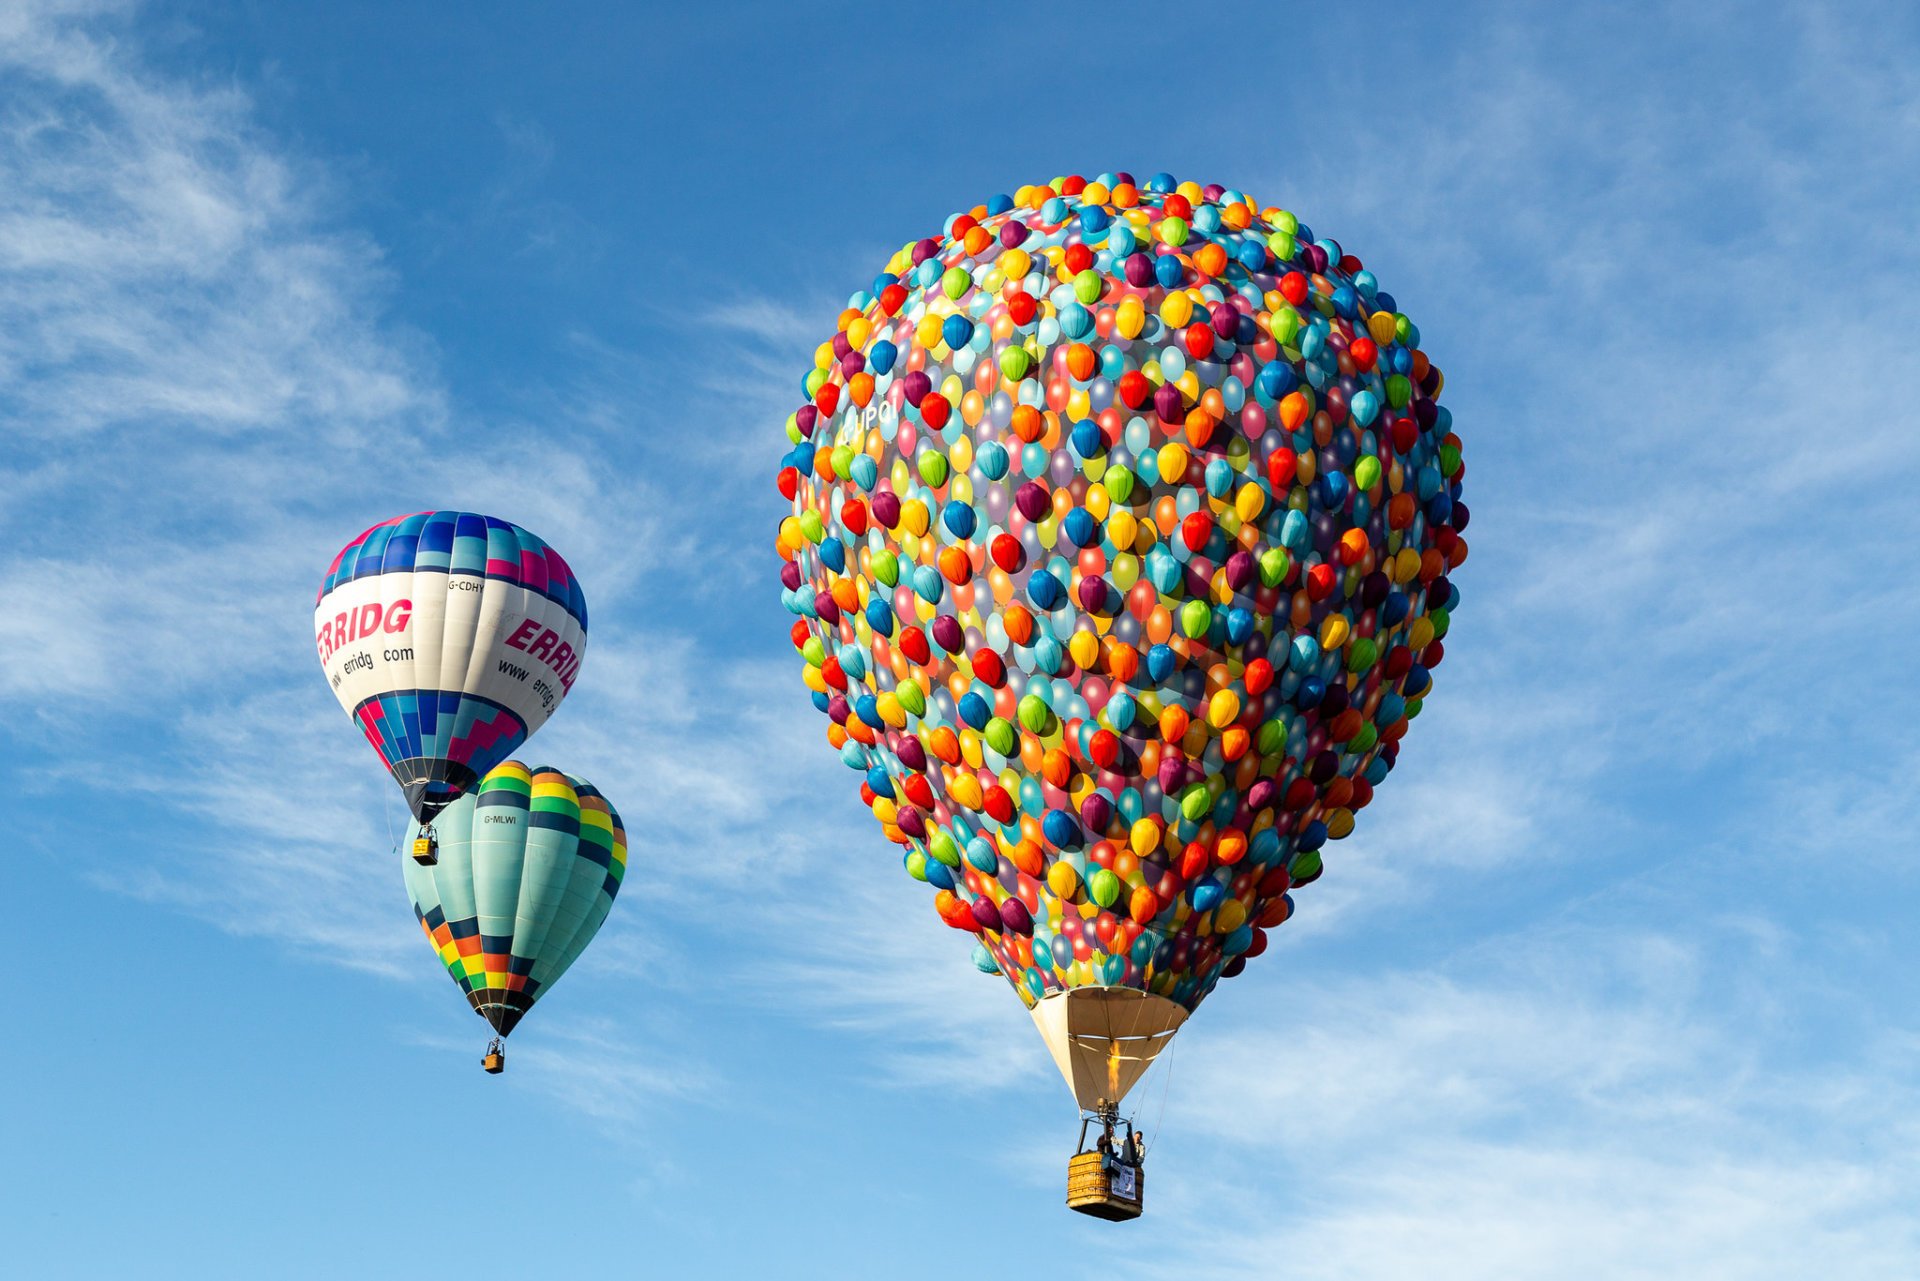 Sky Safari: Longleat Balloon Festival